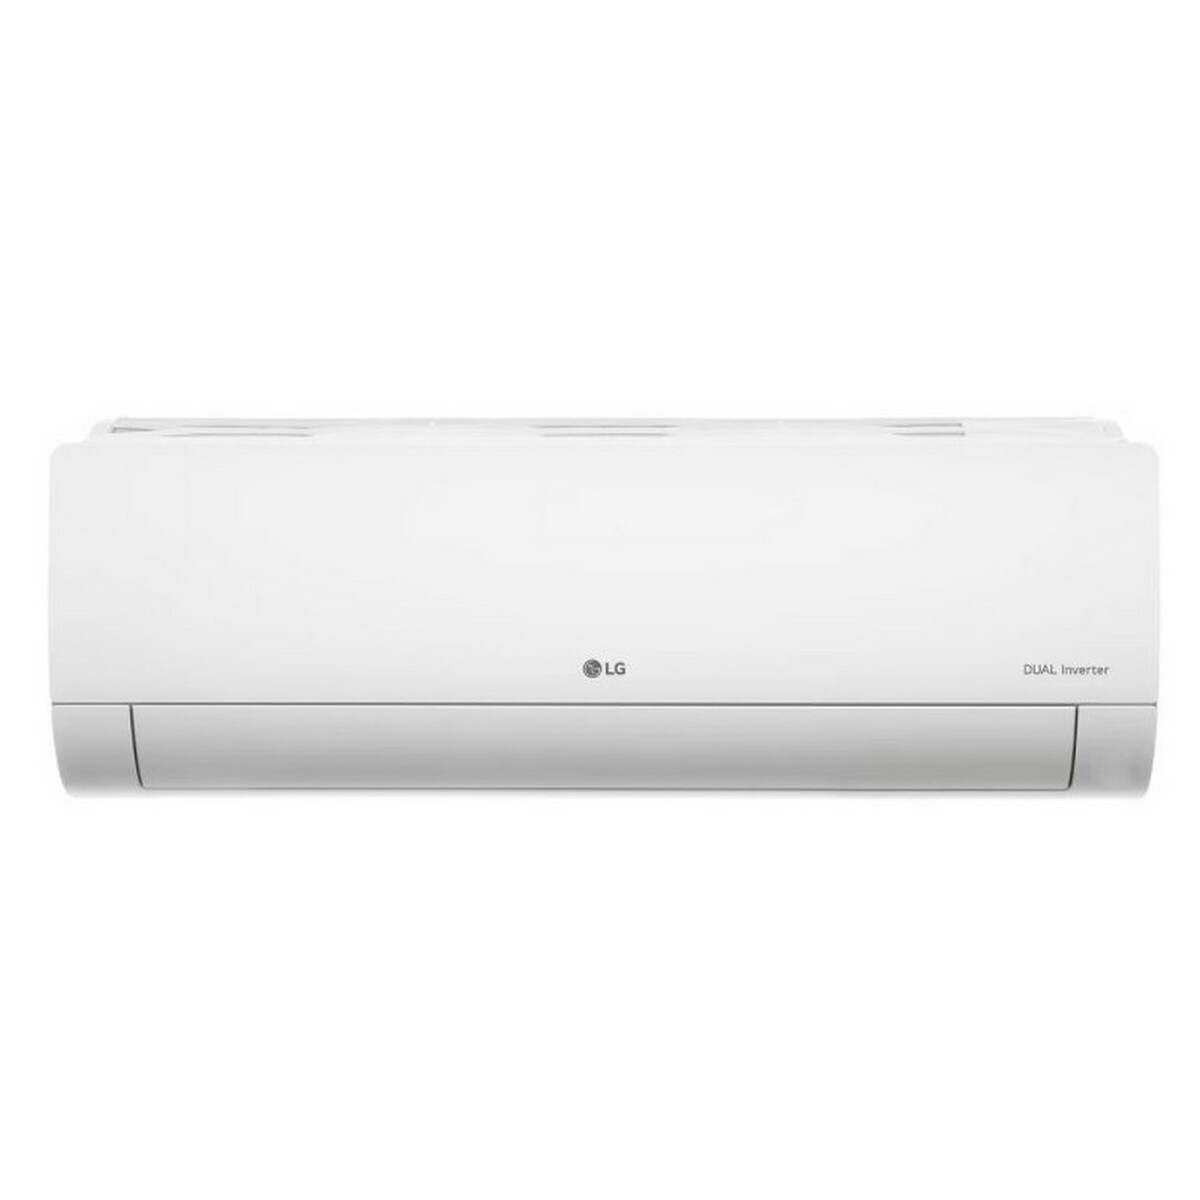 LG Inverter Air Conditioner MS-Q18HNZA 1.5Ton 5*